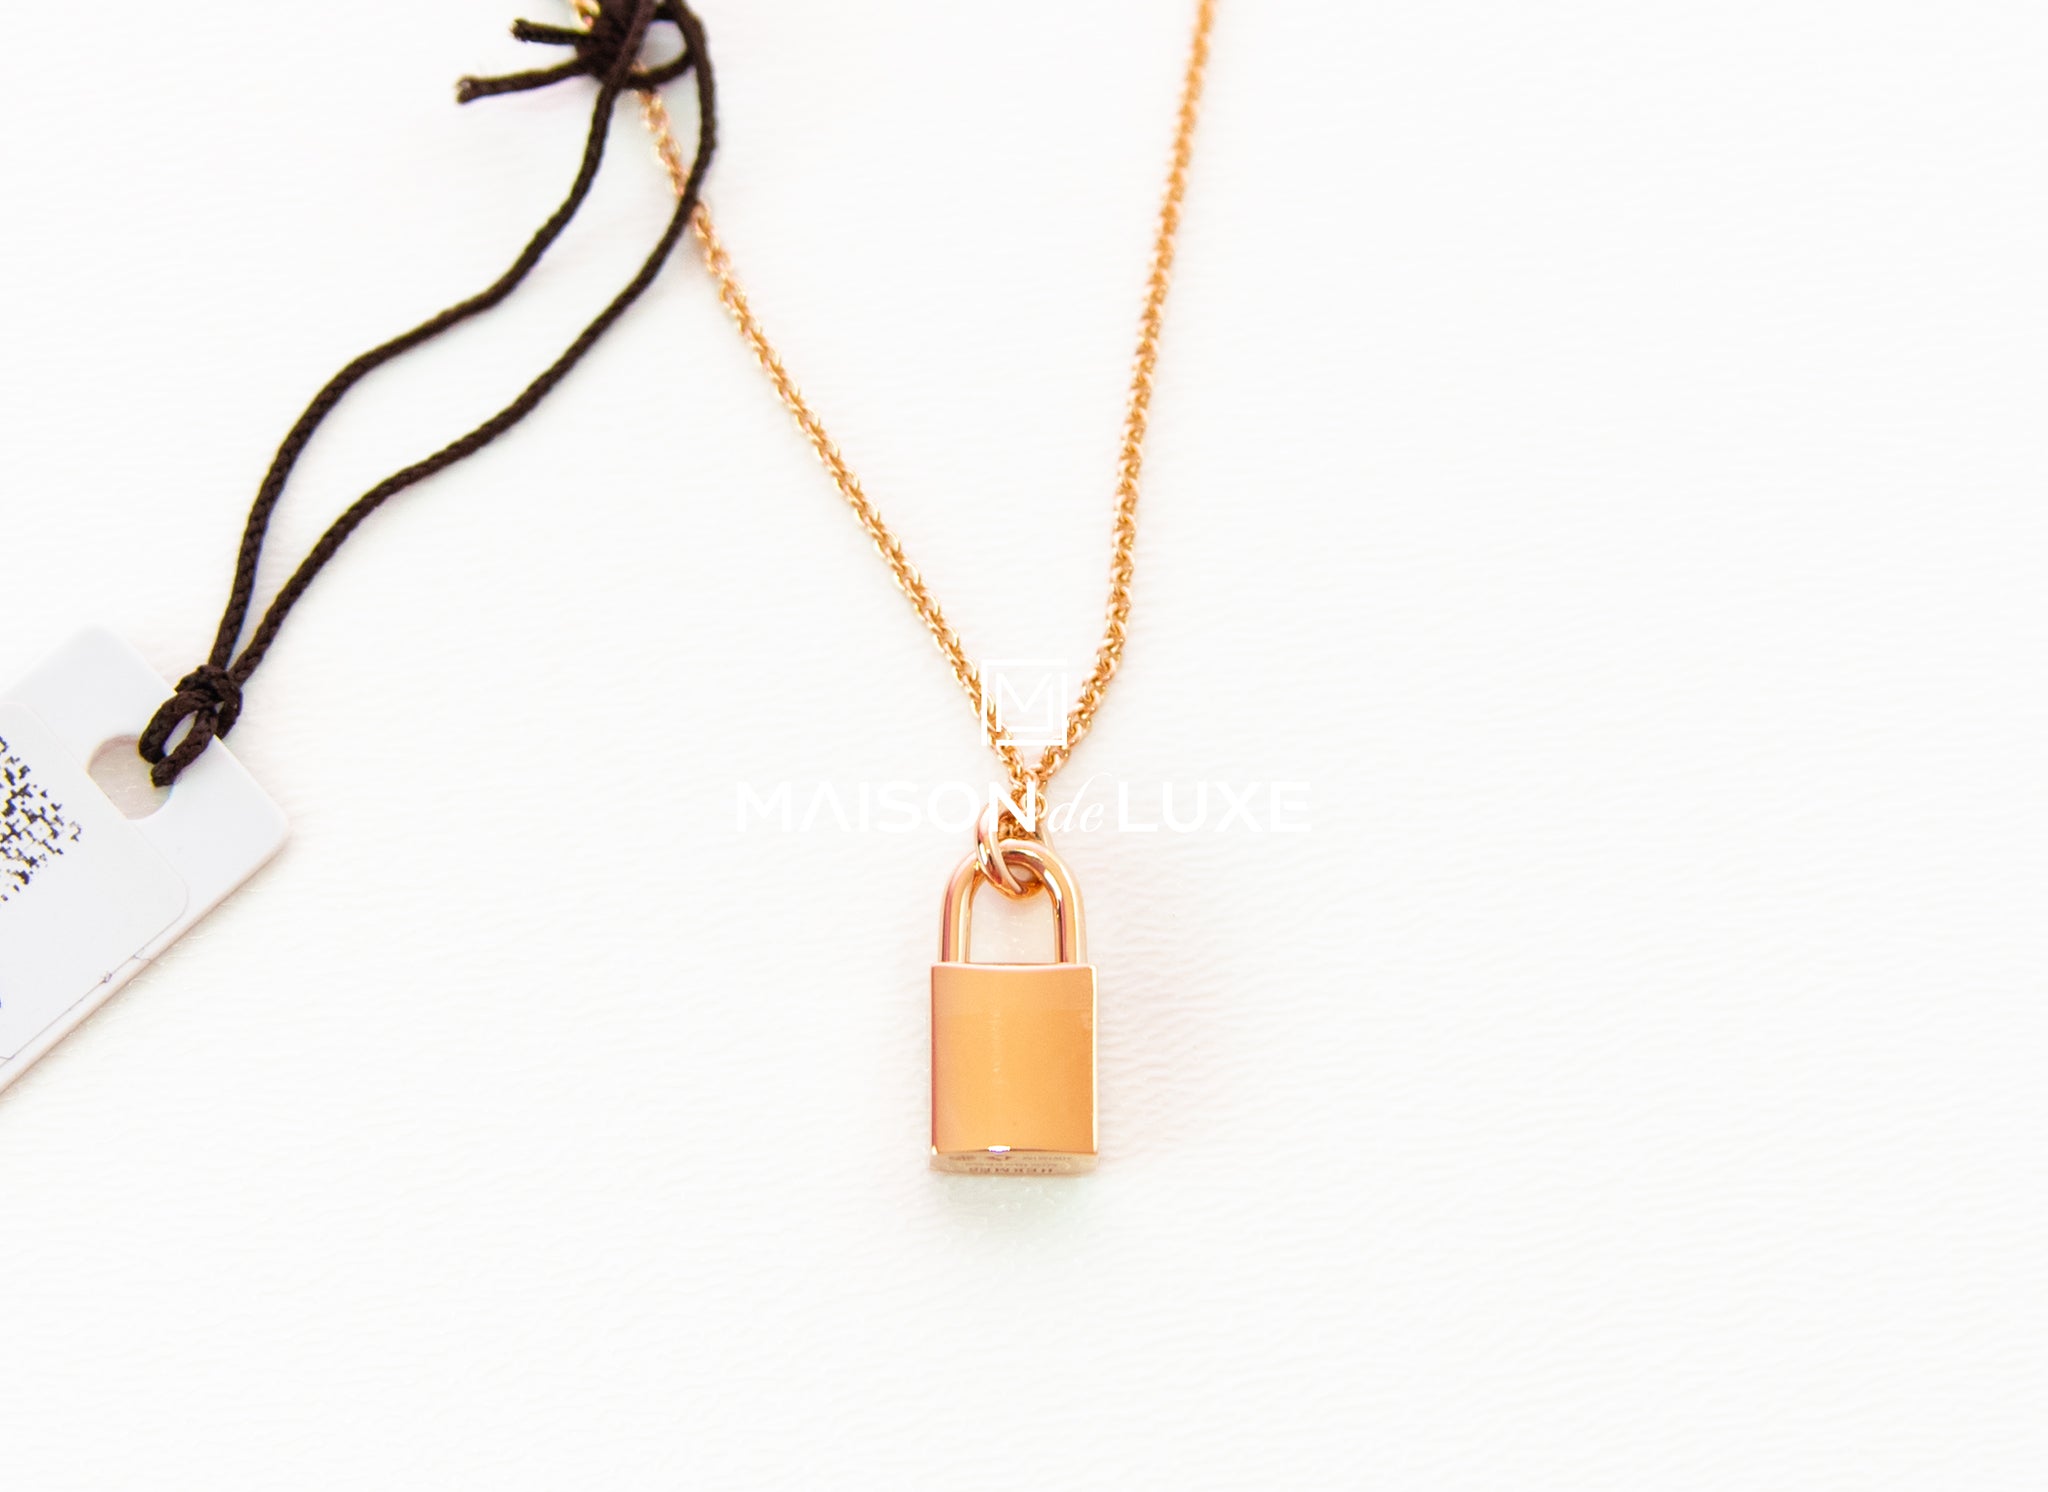 18K Gold Diamond Key Lock Pendant Necklace - Luxe Jewelry